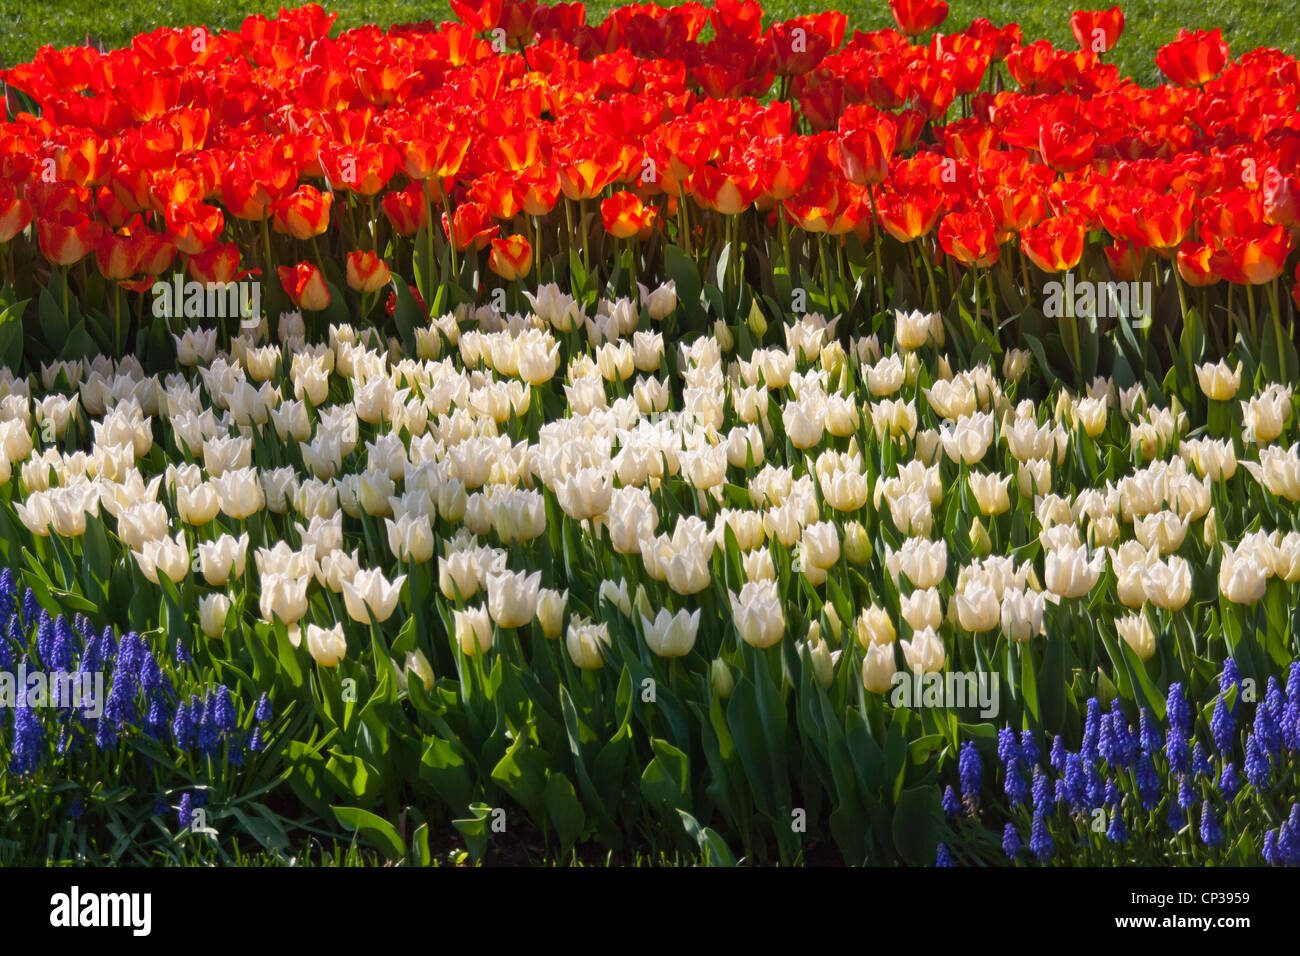 Orange and white tulips, with grape hyacinths Stock Photo